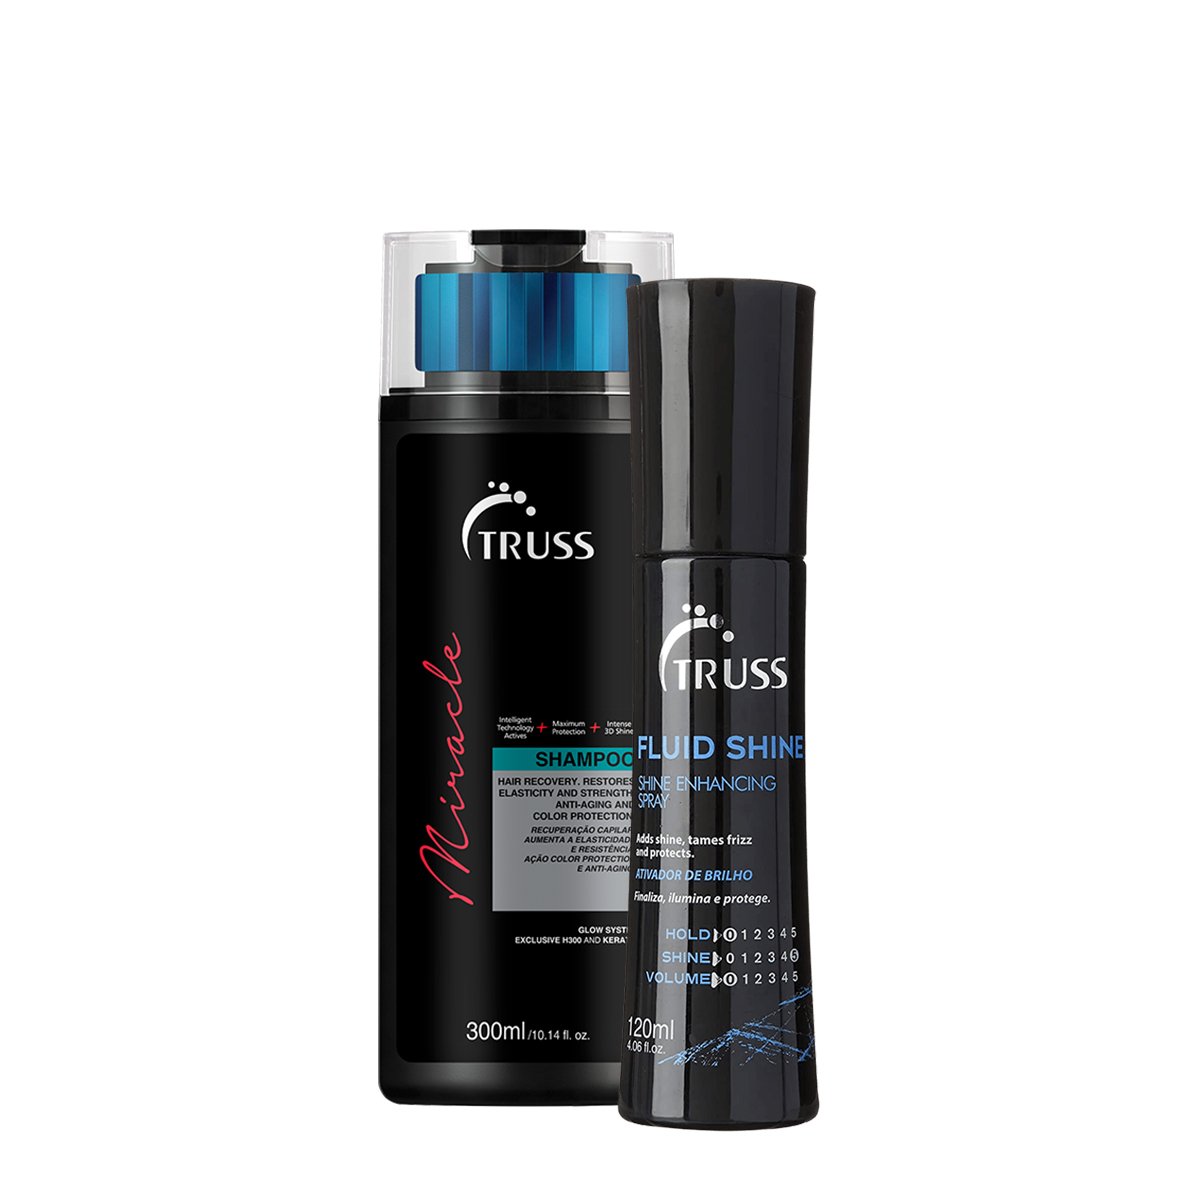 Kit Truss Miracle Shampoo e Fluid Shine (2 produtos) ÚNICO 1